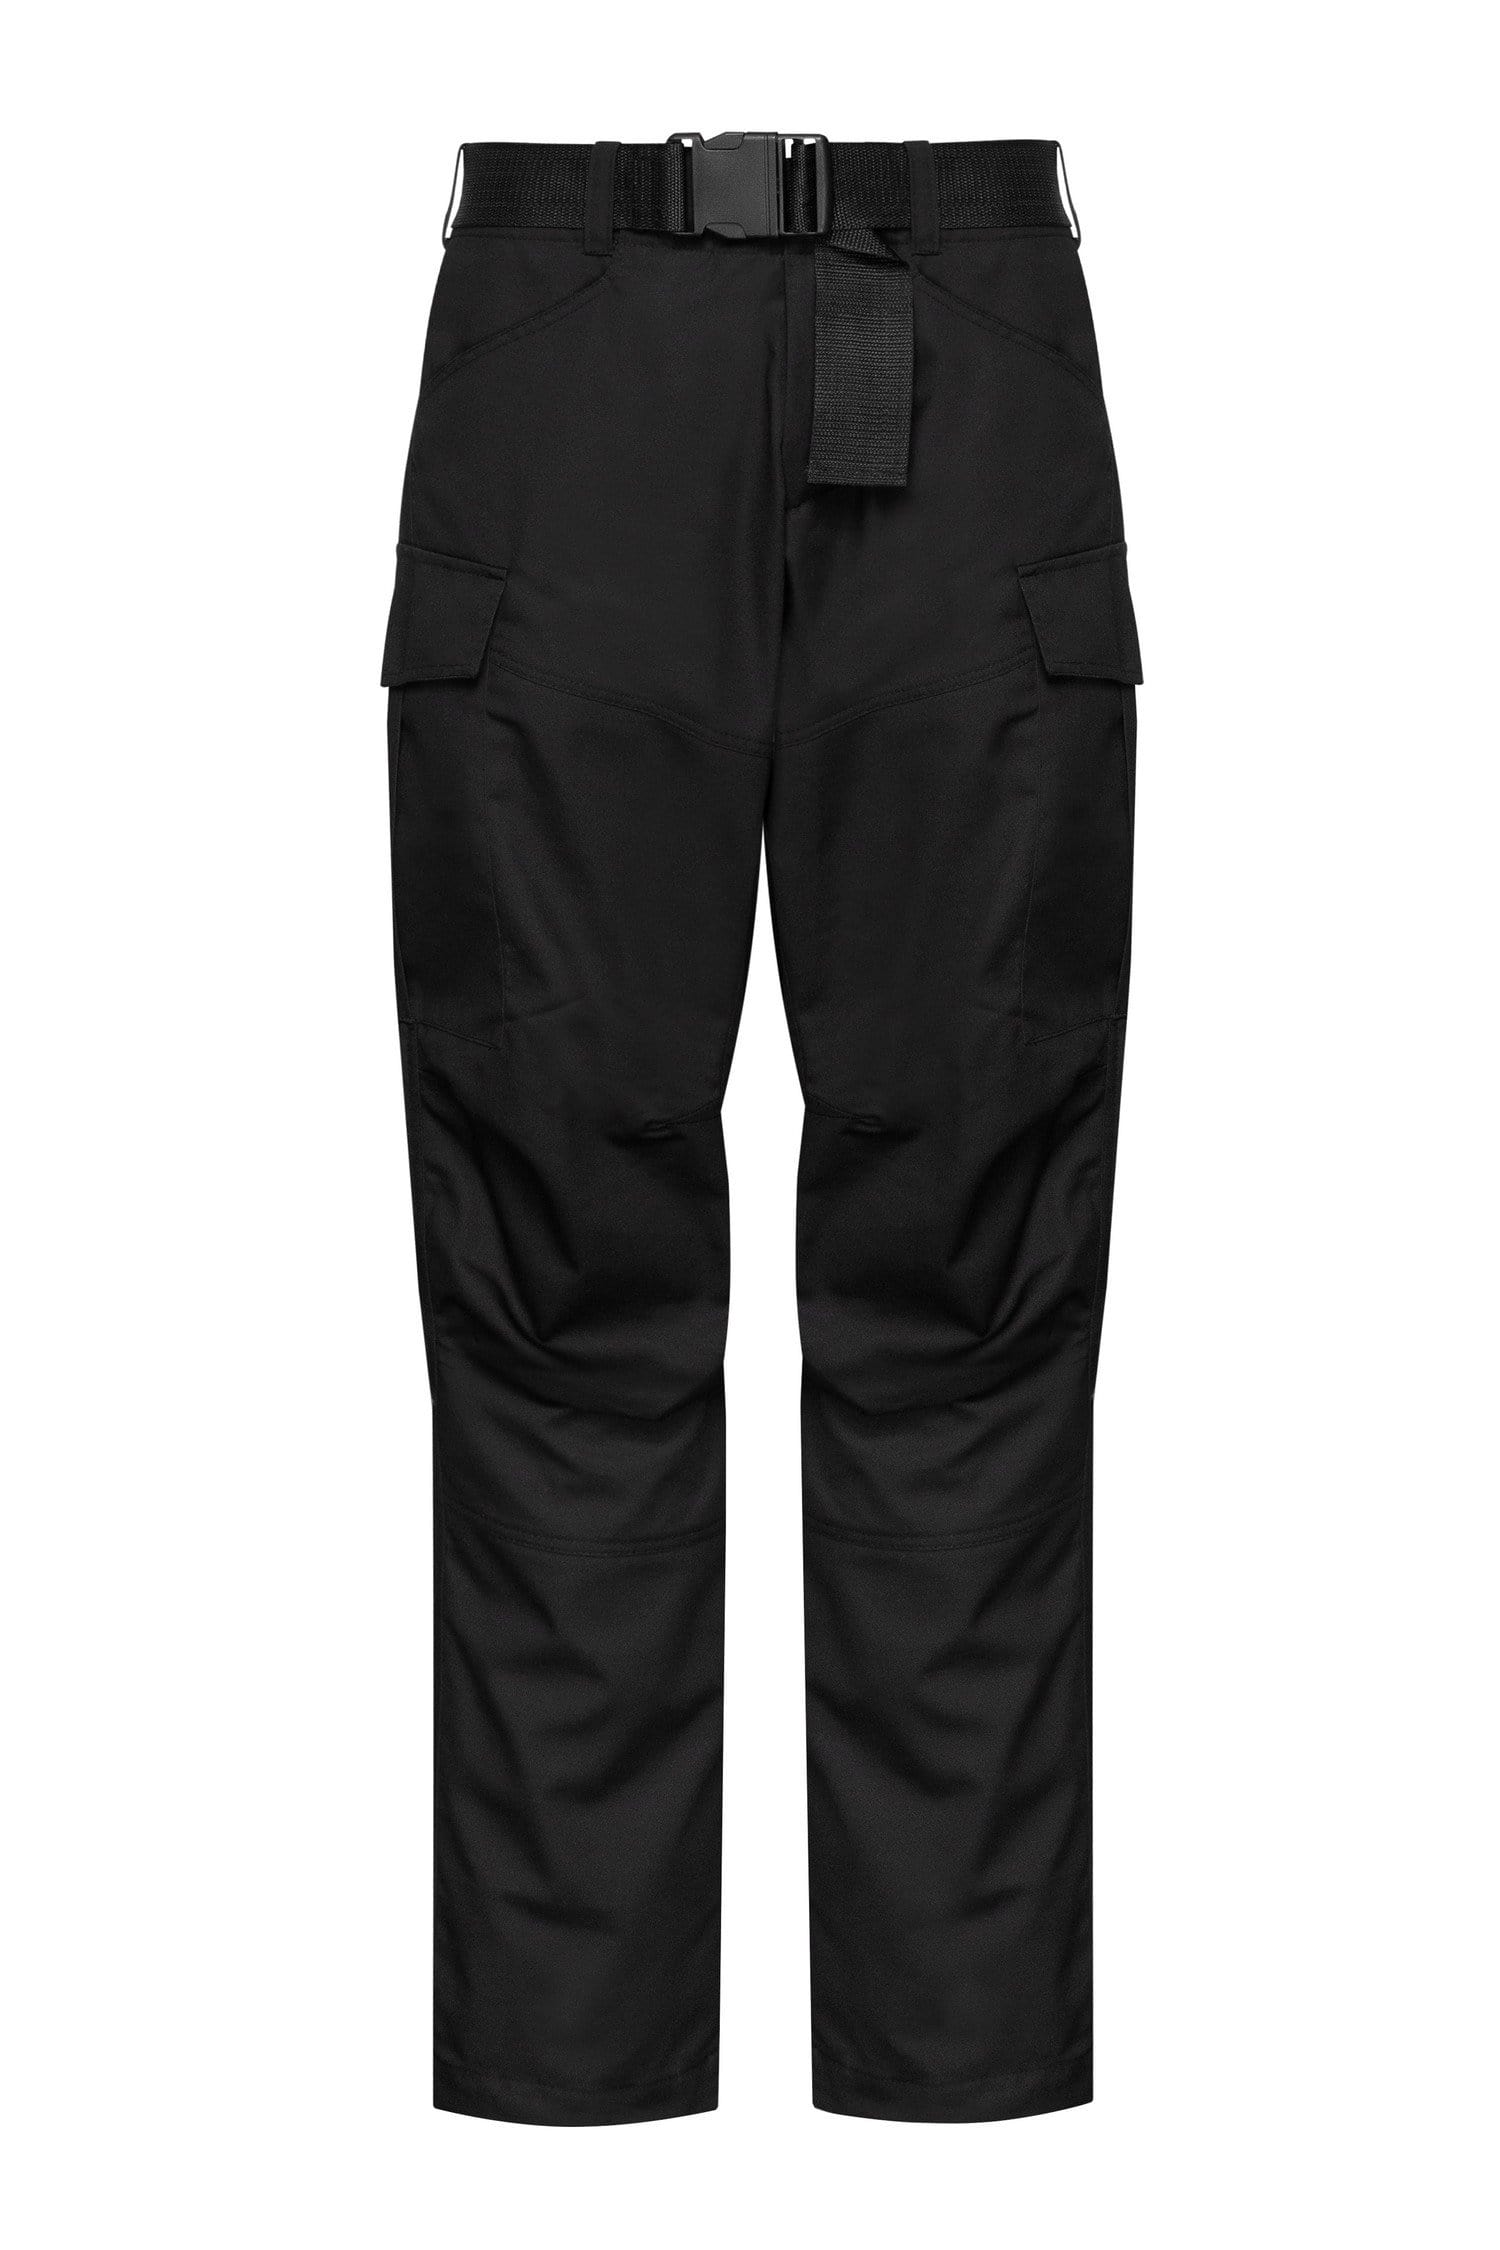 Designer men's pants - Buy gothic men's pants | Urban pants for men ...